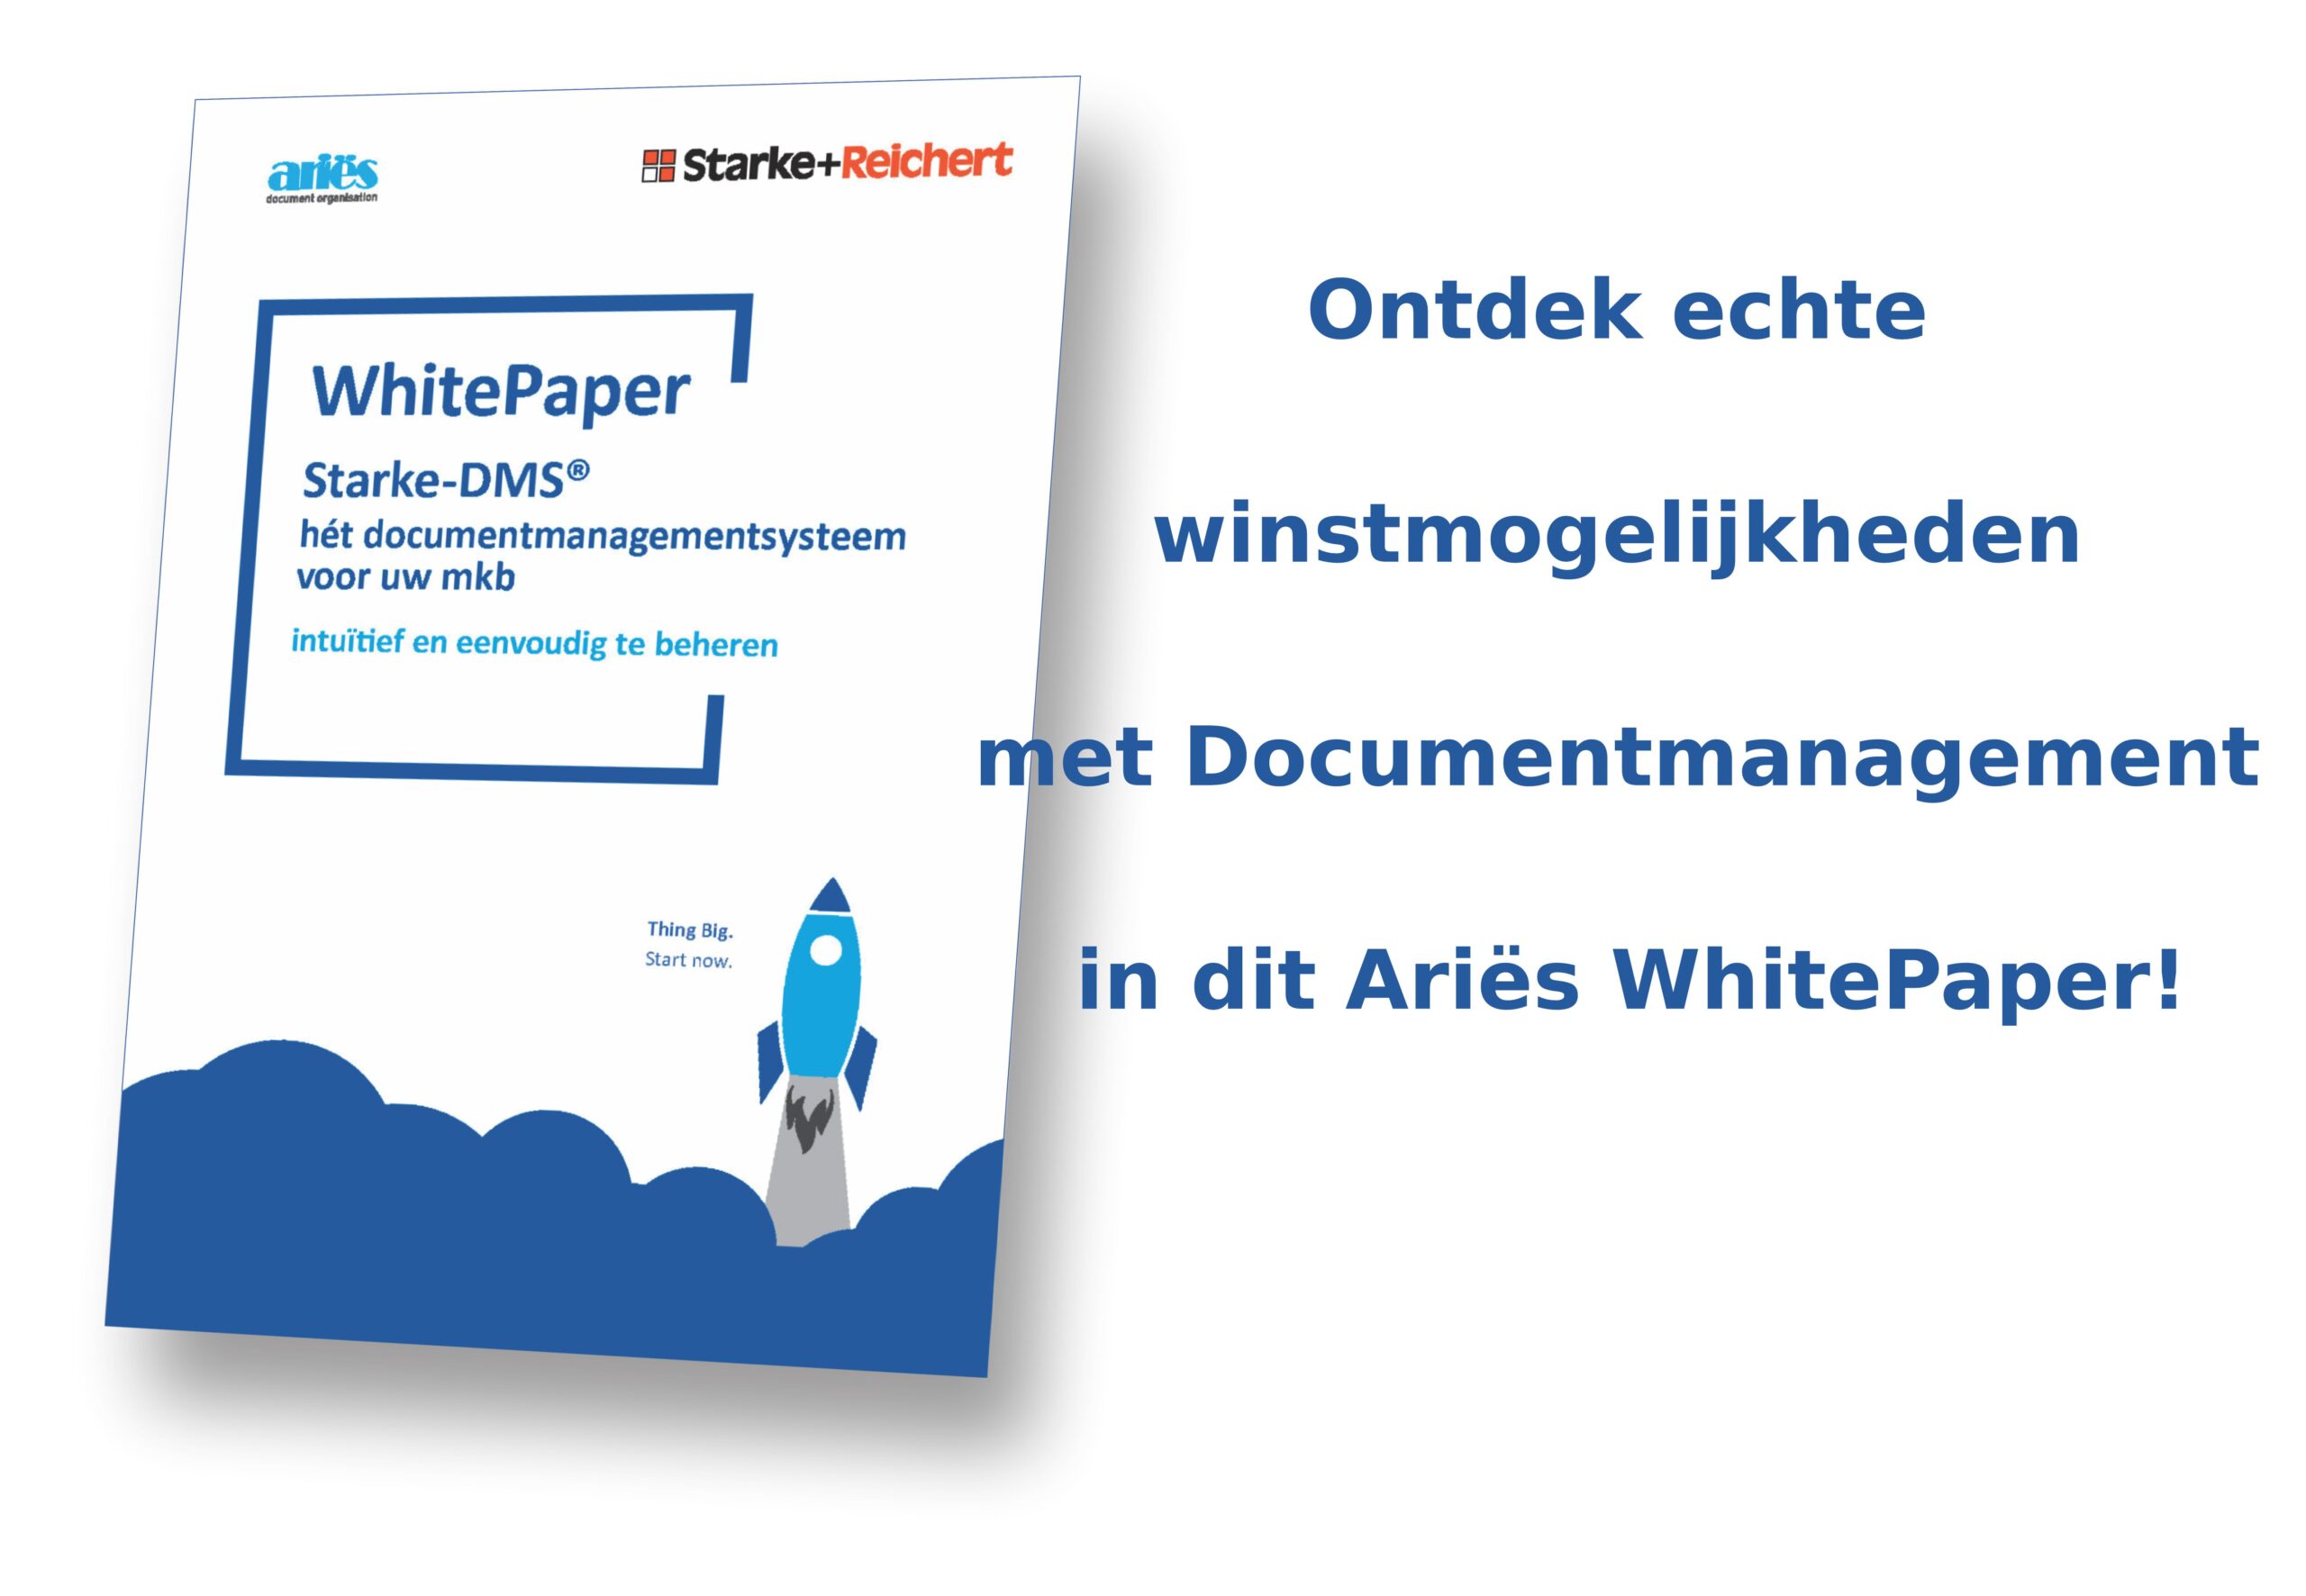 Whitepaper: Starke-DMS®, hét documentmanagementsysteem voor uw mkb